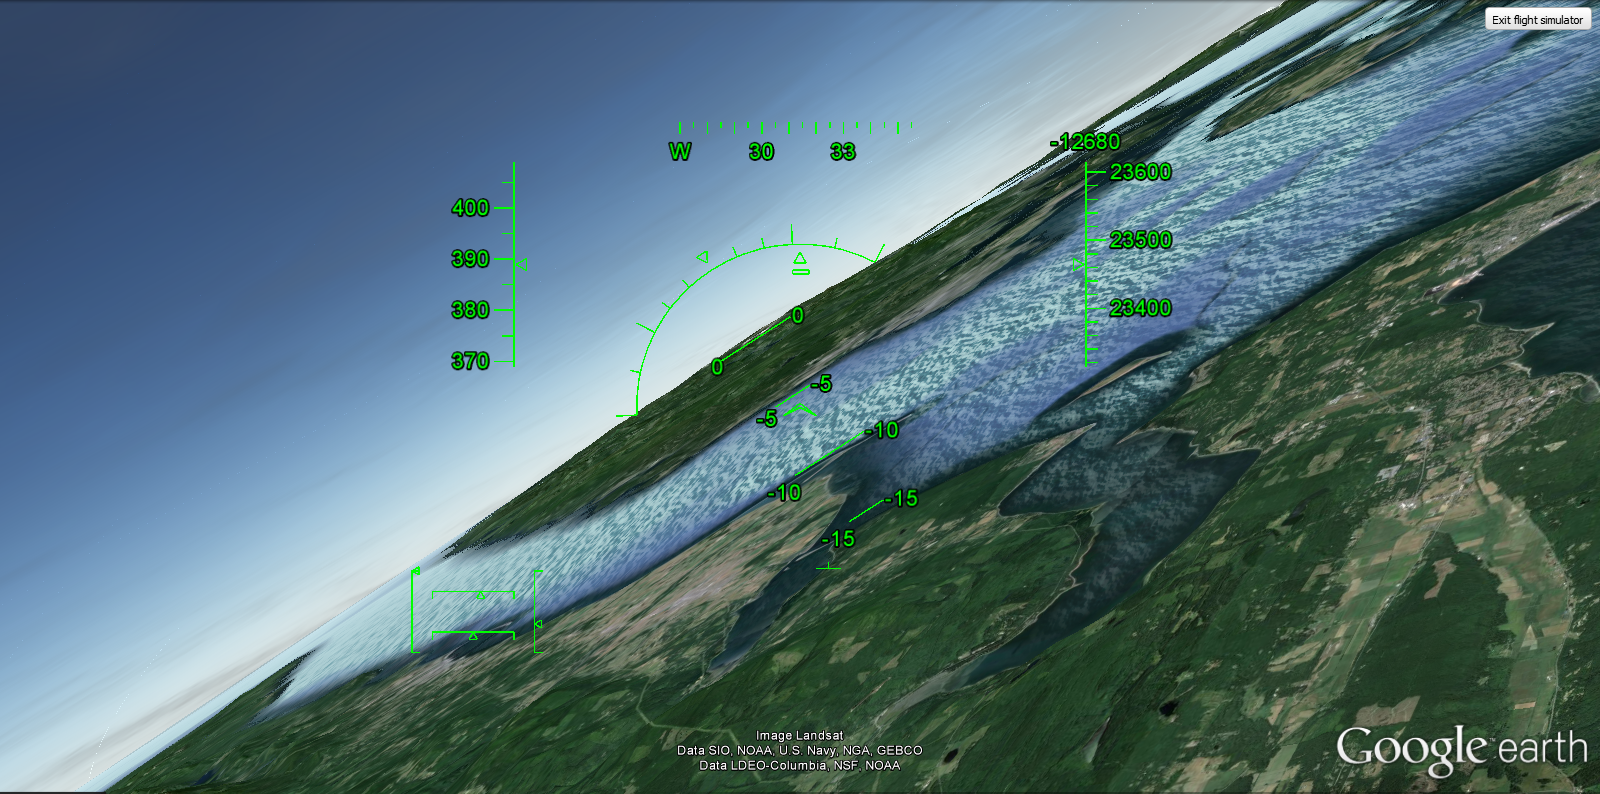 An excellent flight simulator for Google Earth - Google Earth Blog